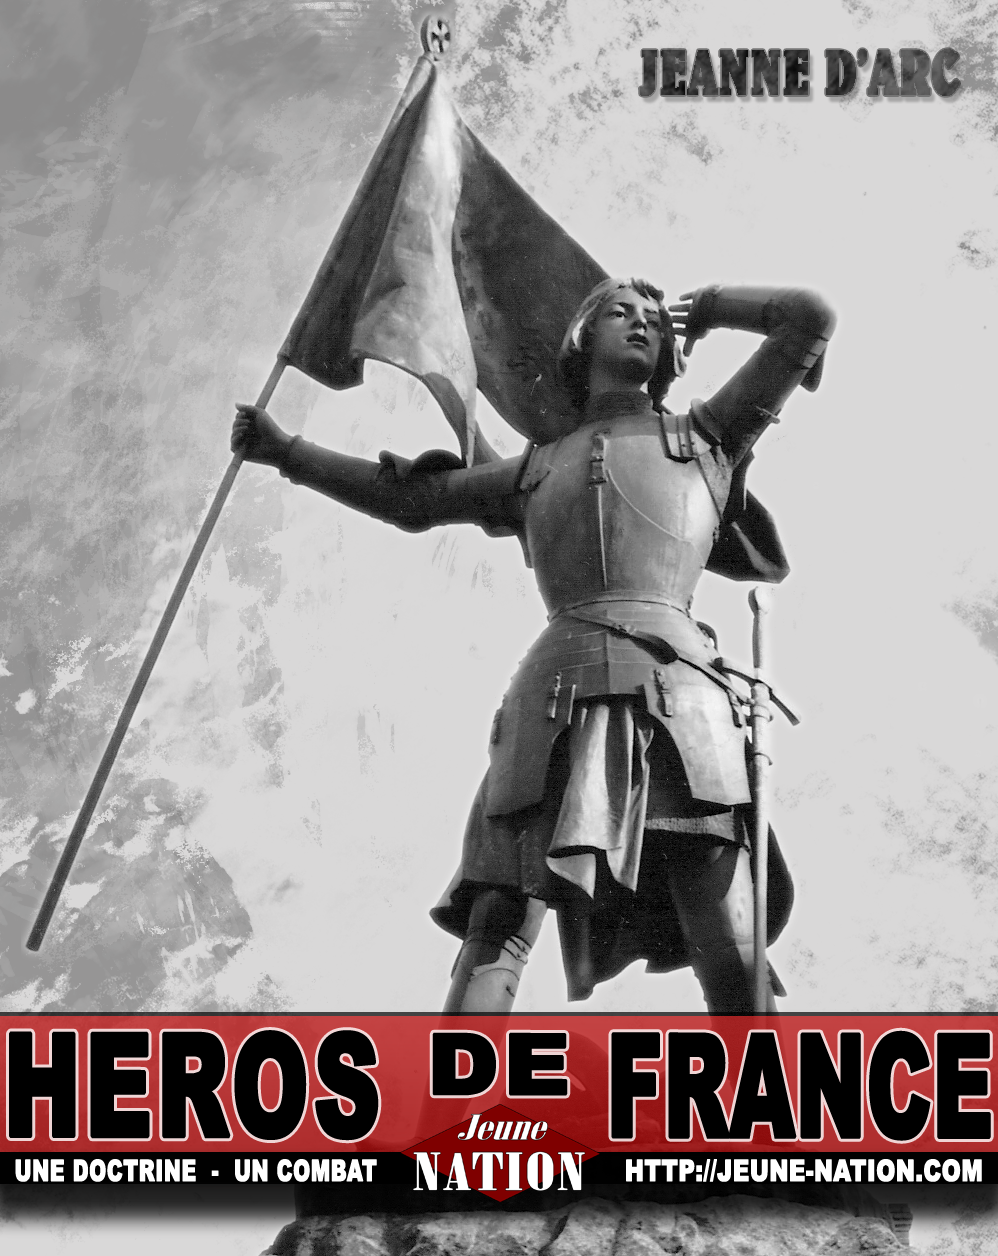 heros-de-france-jeanne-jeune-nation-